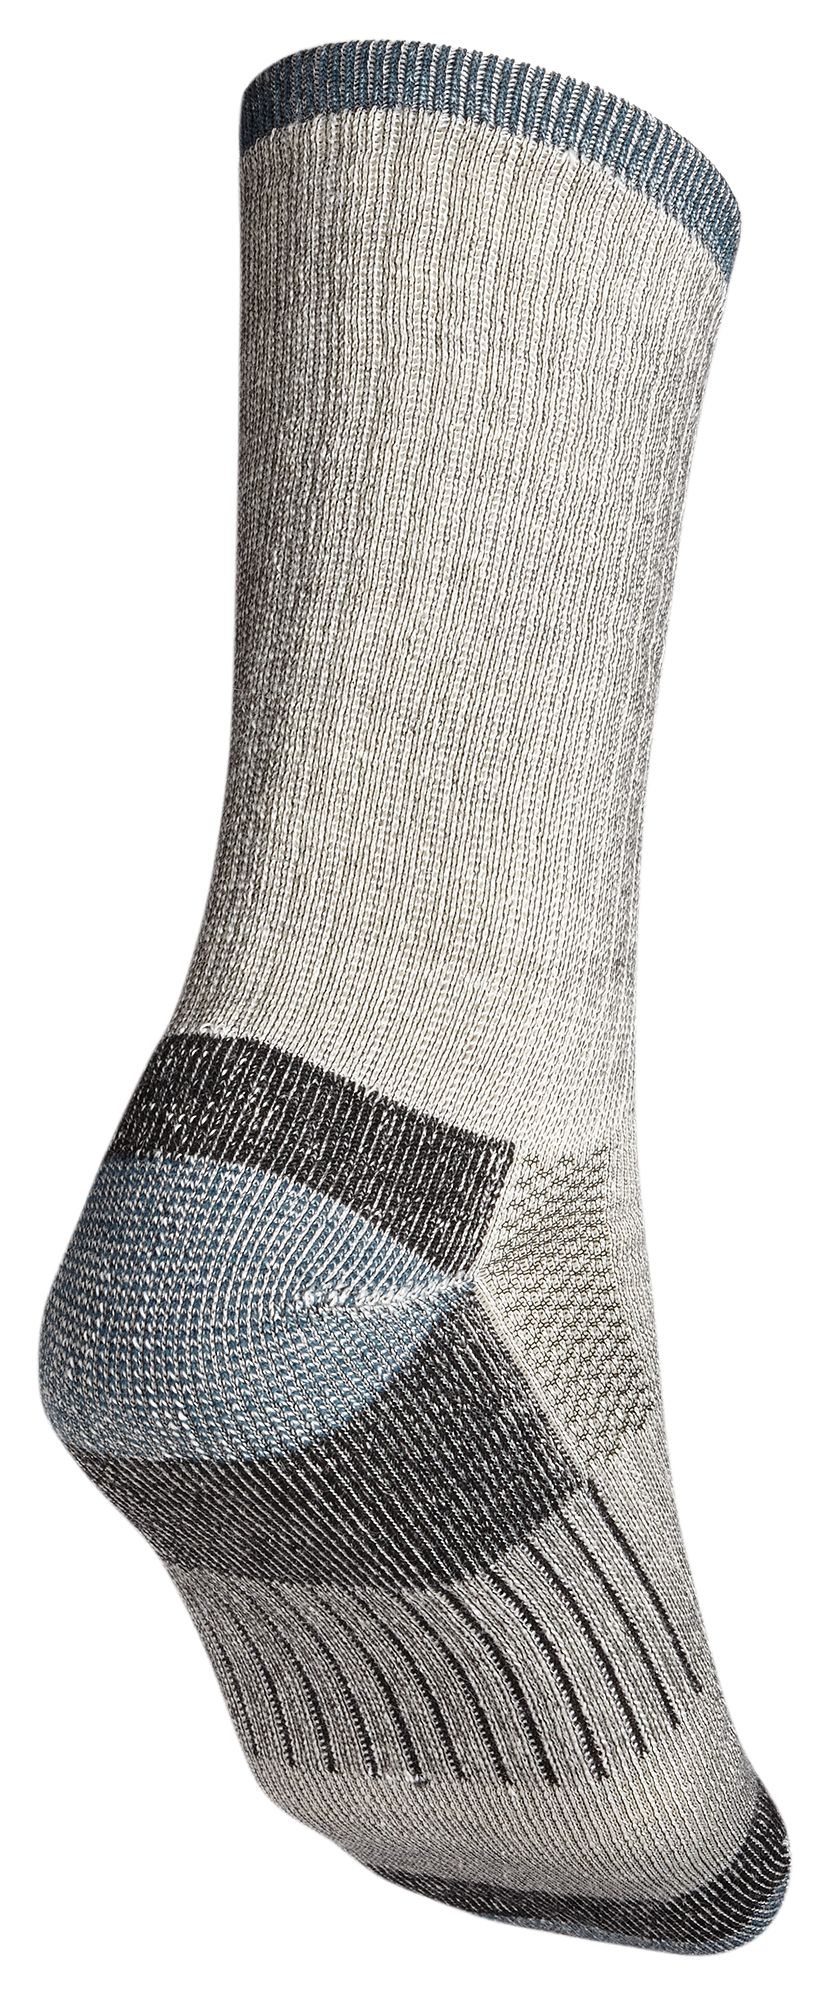 Alpine Design Merino Hiker Socks - 2 Pack